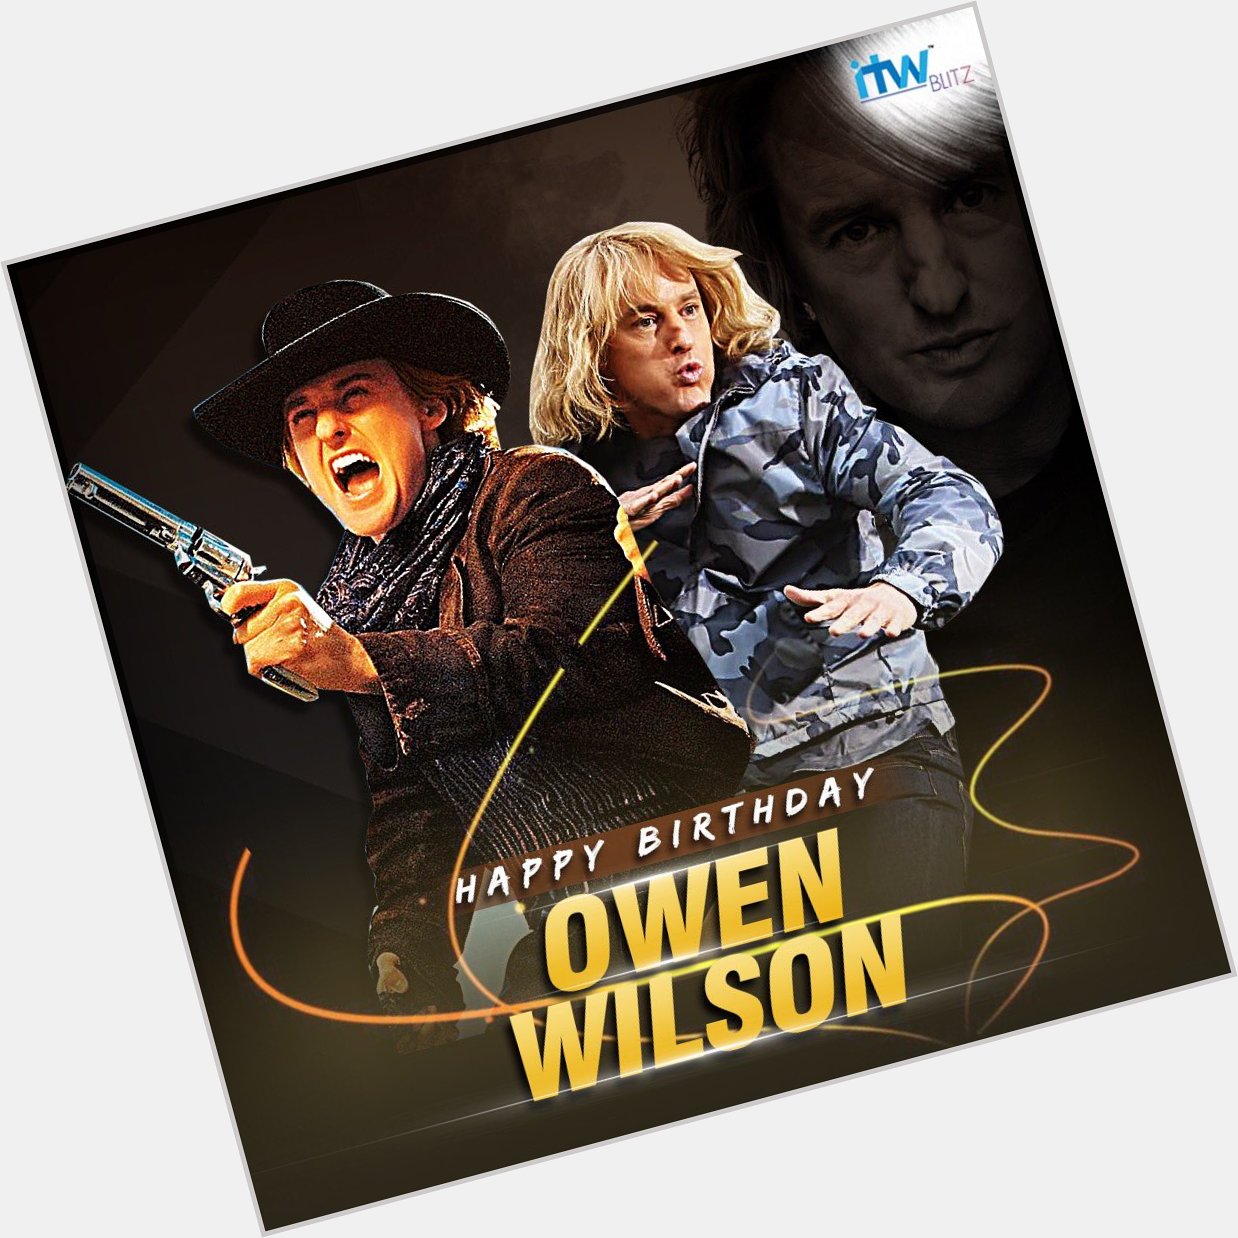 Wishing Owen Wilson a very happy birthday!   